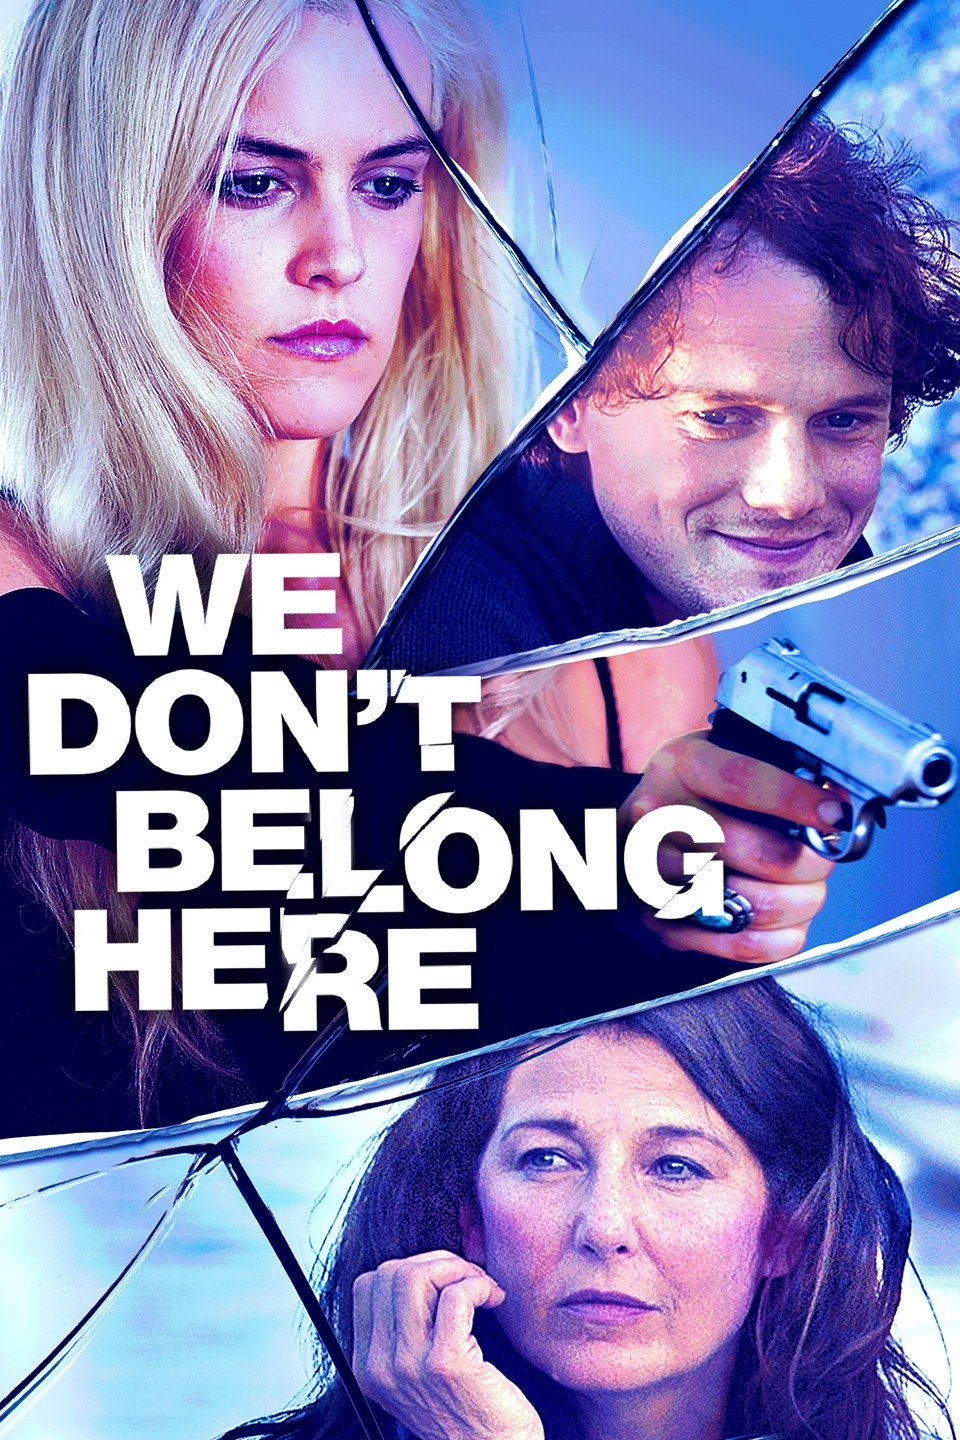 We Don’t Belong Here (2017) บ้านเพี้ยนลับซ่อนเร้น